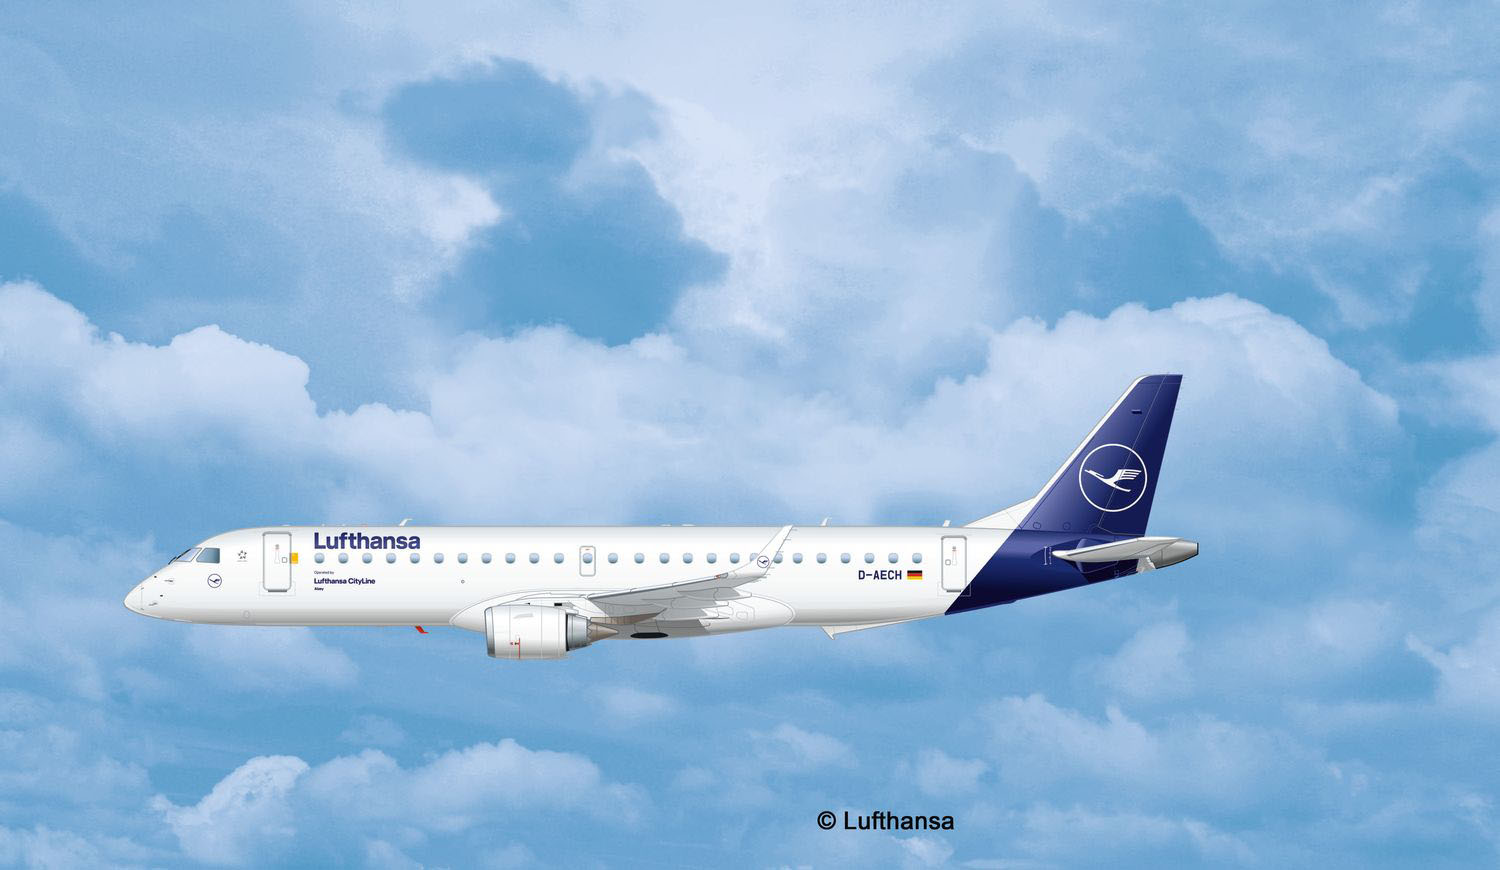 Revell Embraer 190 Lufthansa "New Livery" in 1:144 bouwpakket